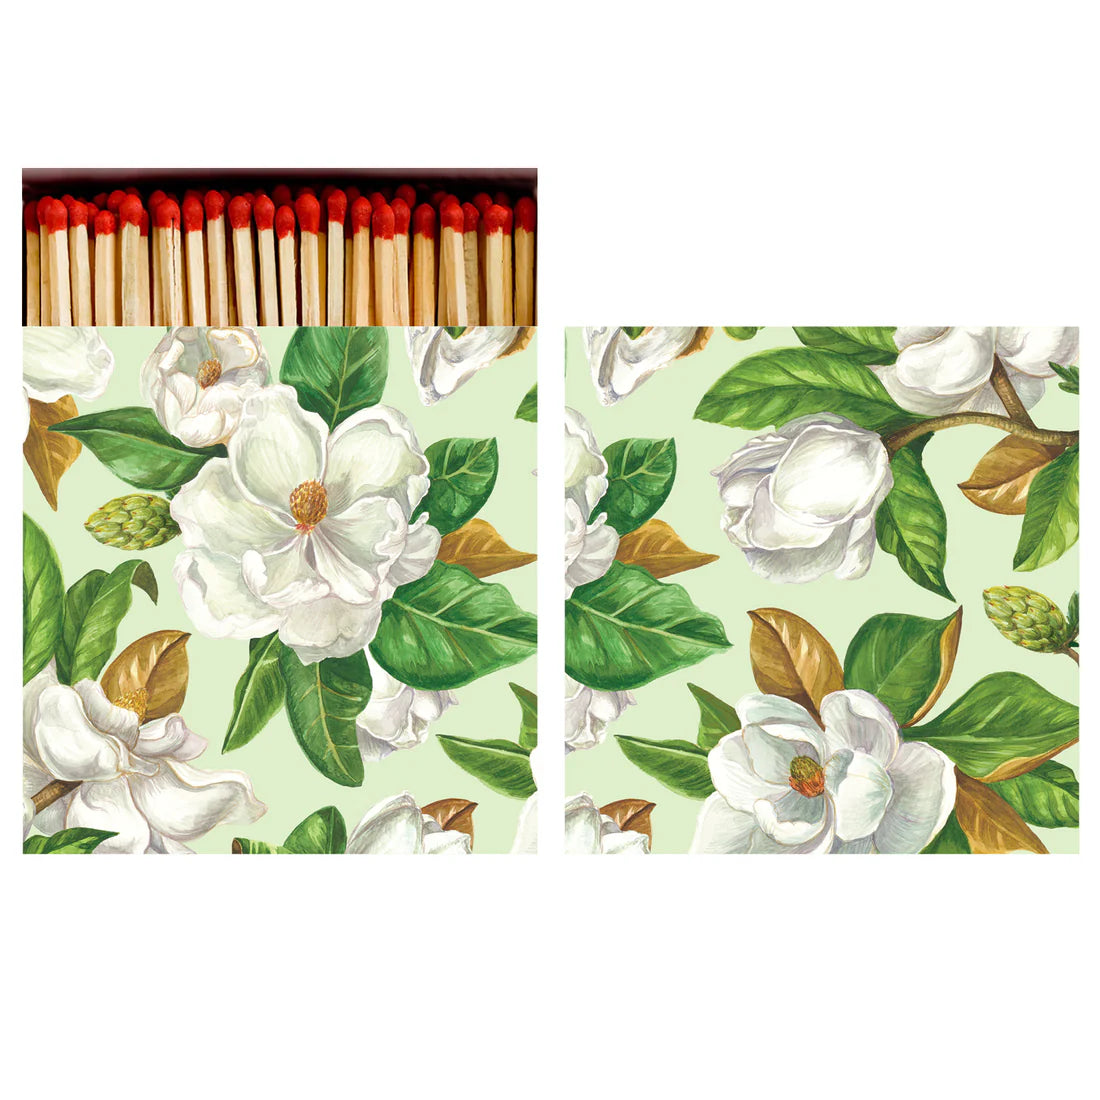 Magnolia Matches - Box of 60